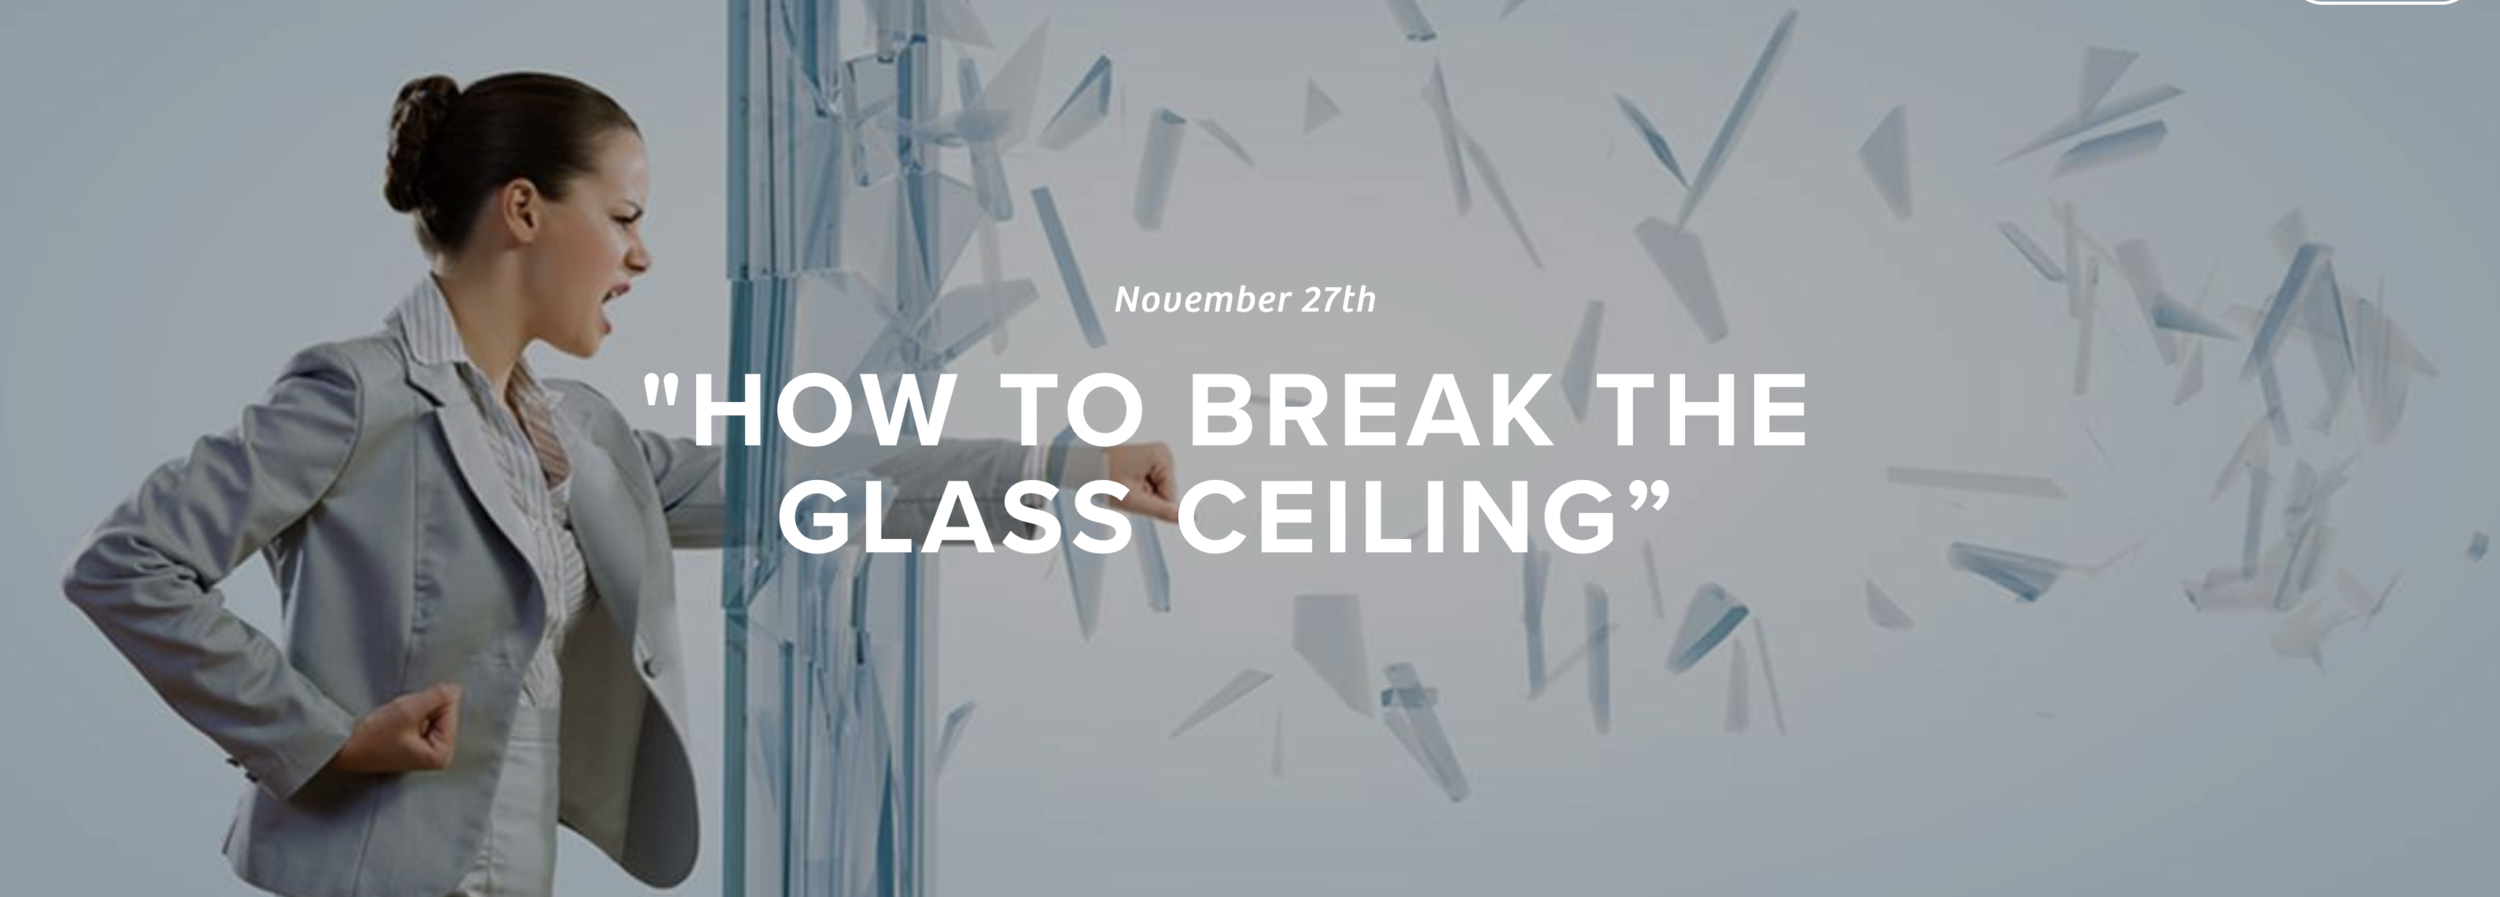 Essteem How To Break The Glass Ceiling Lifion